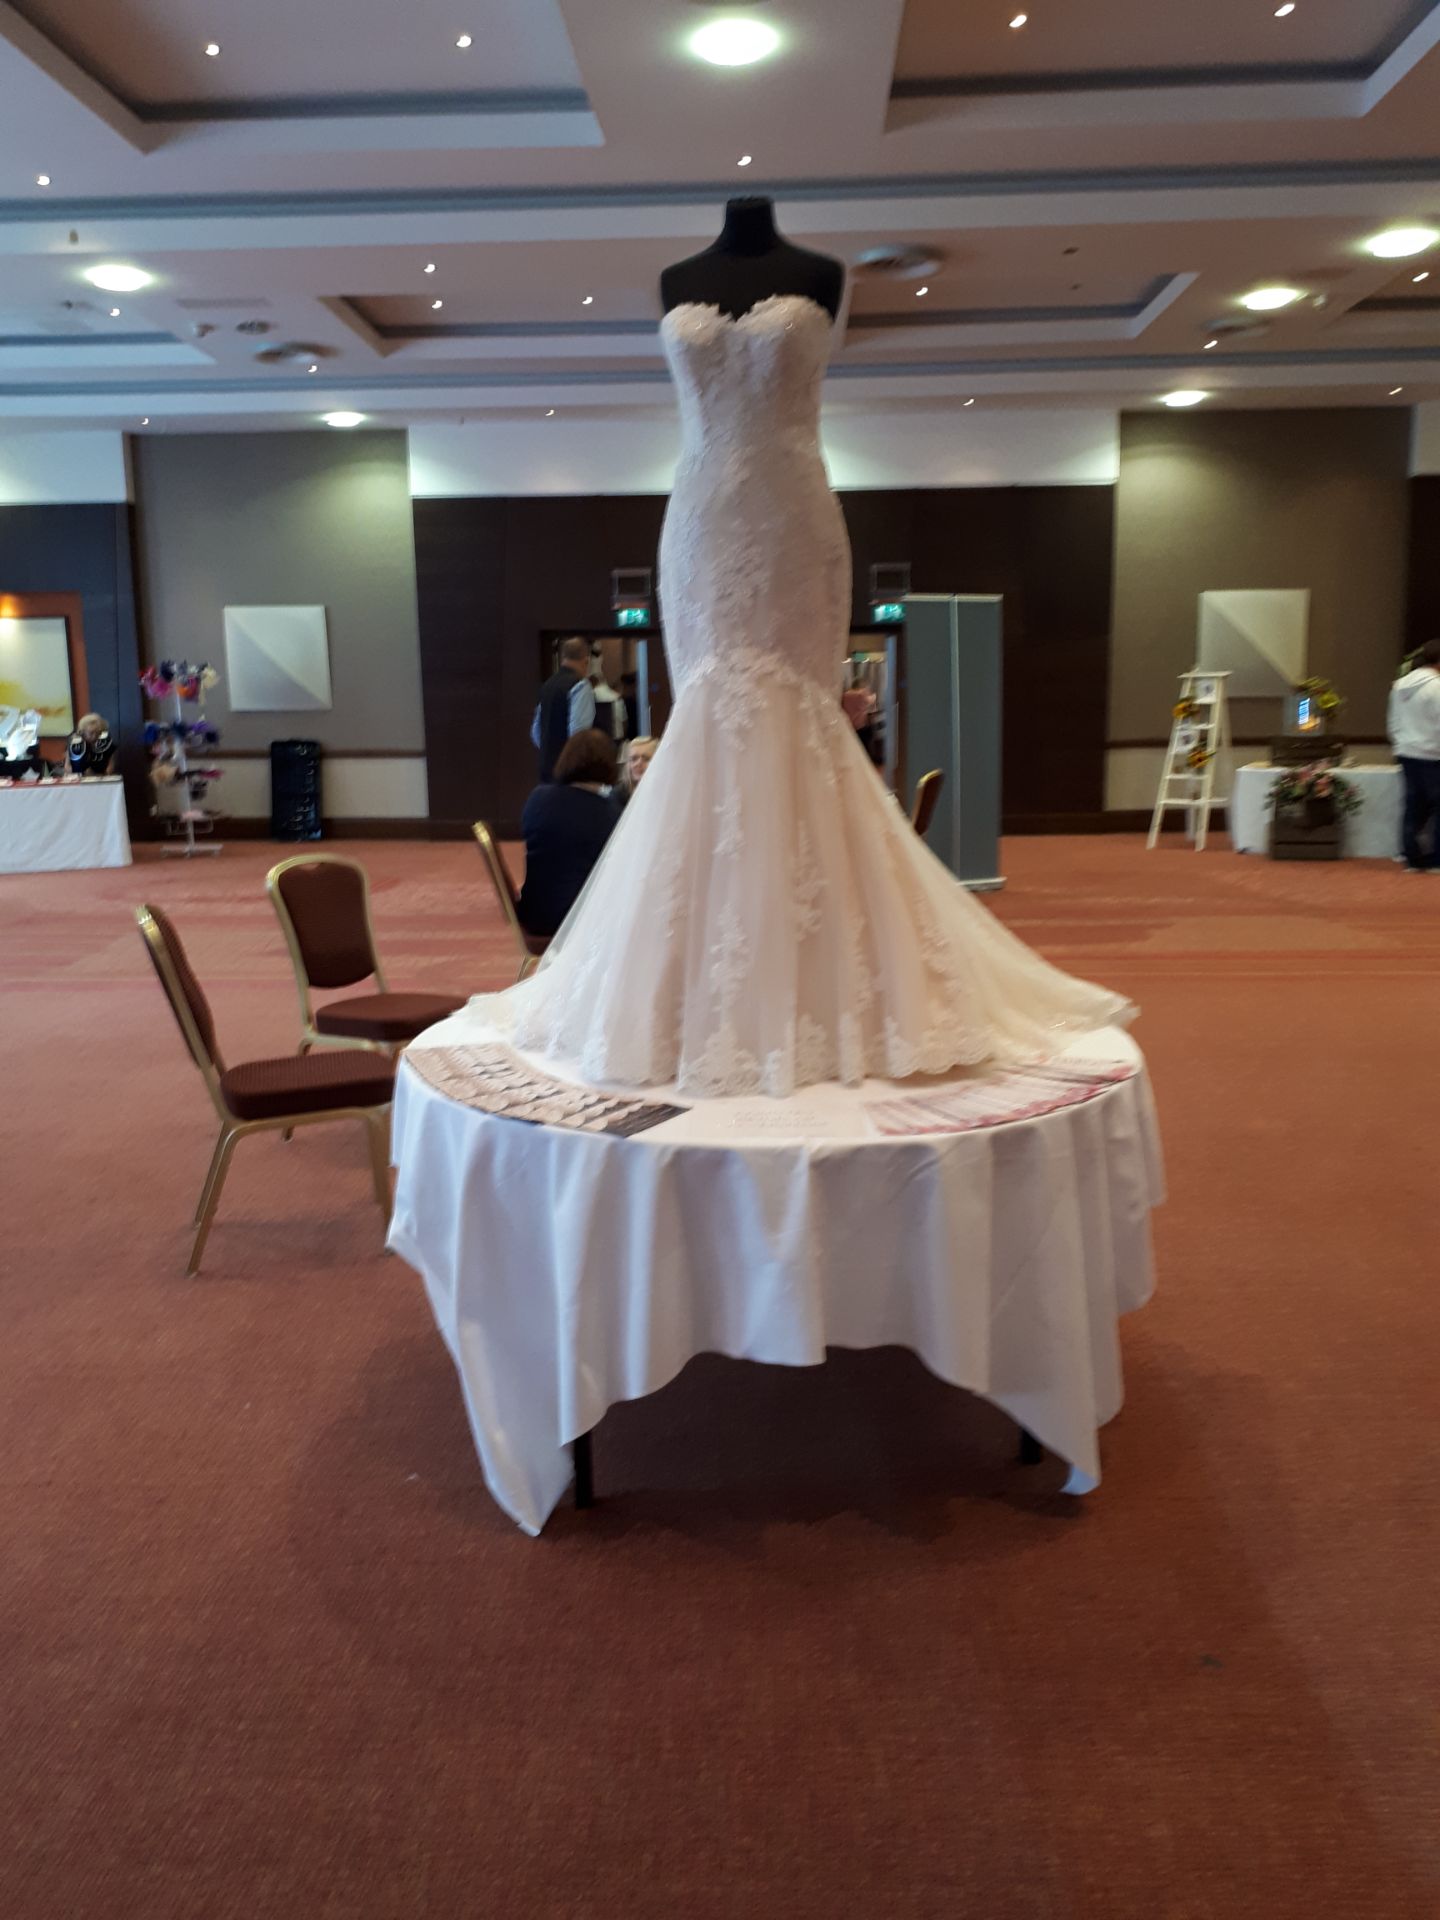 Ladybird Bridal Wedding Dress RRP £1,595 Size 8 Champagne